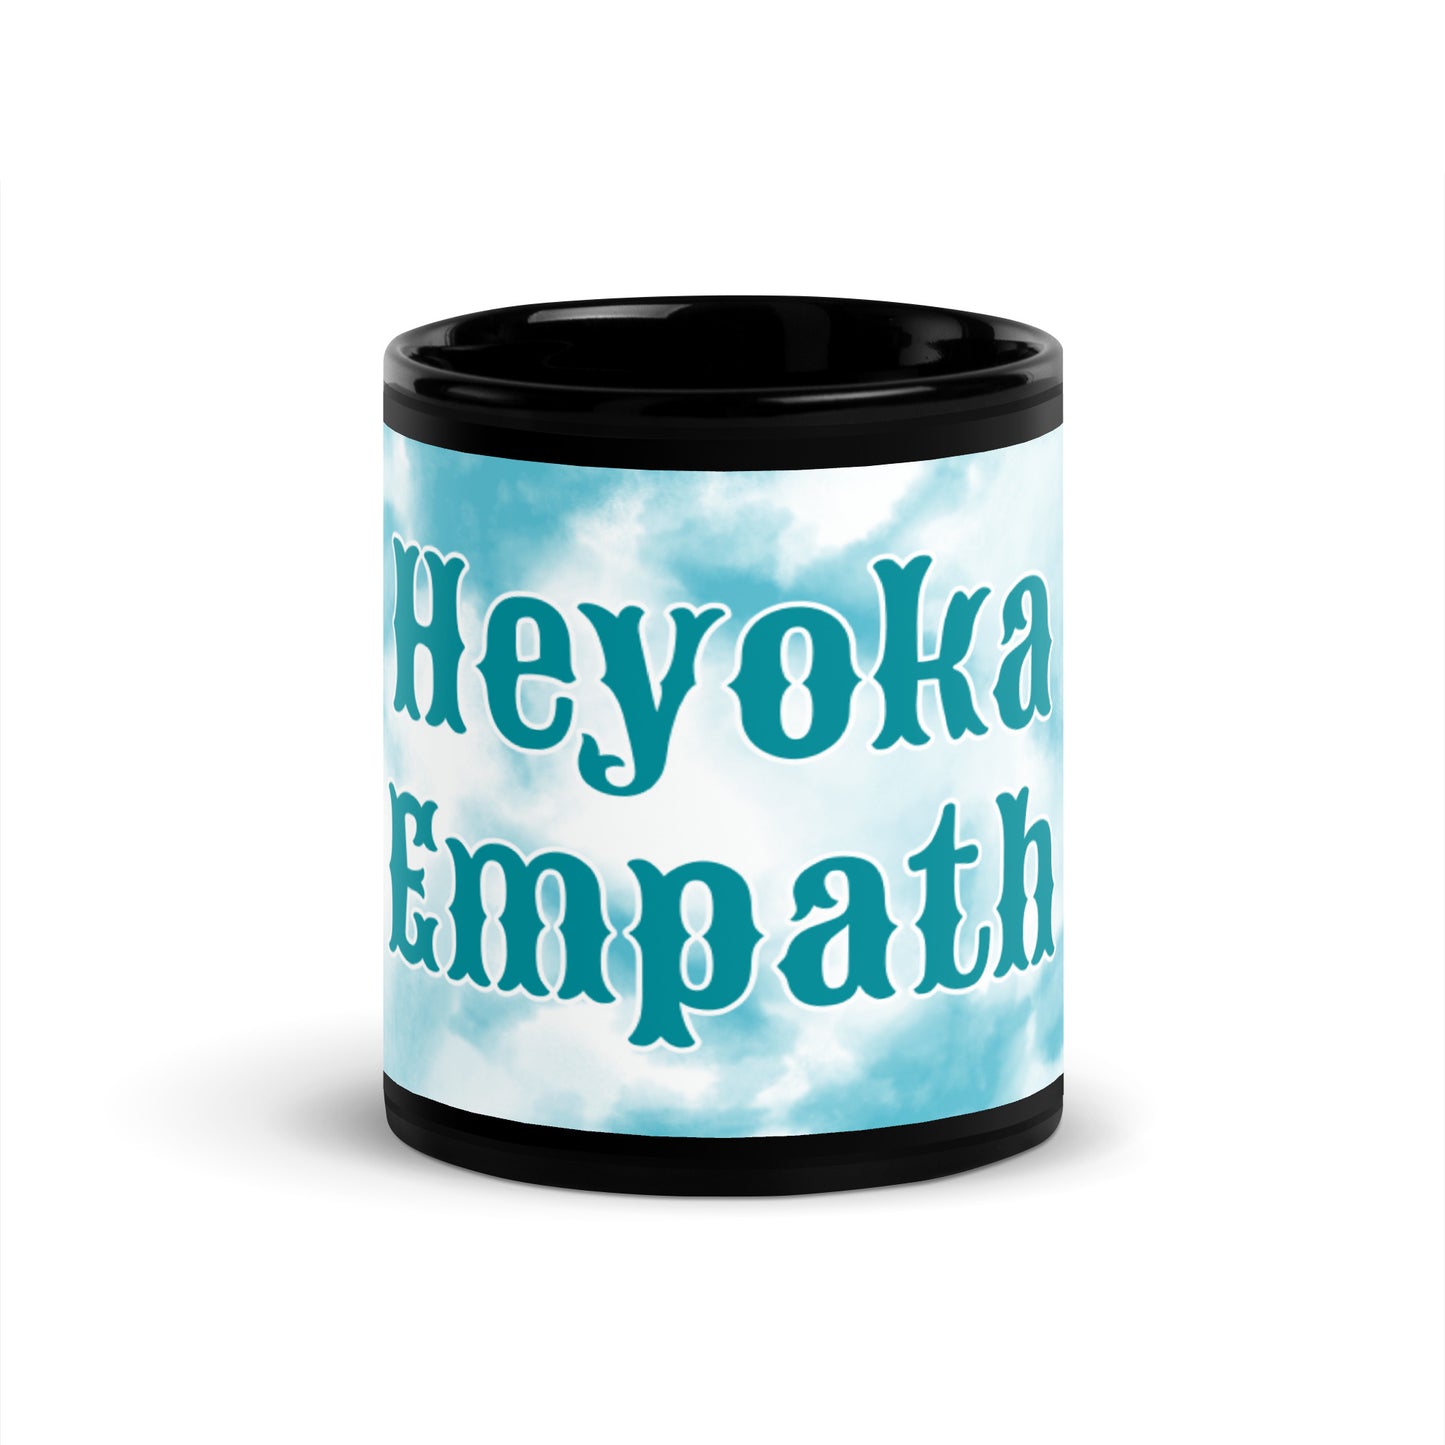 Teal Tie Dye Black Glossy Mug - Heyoka Empath